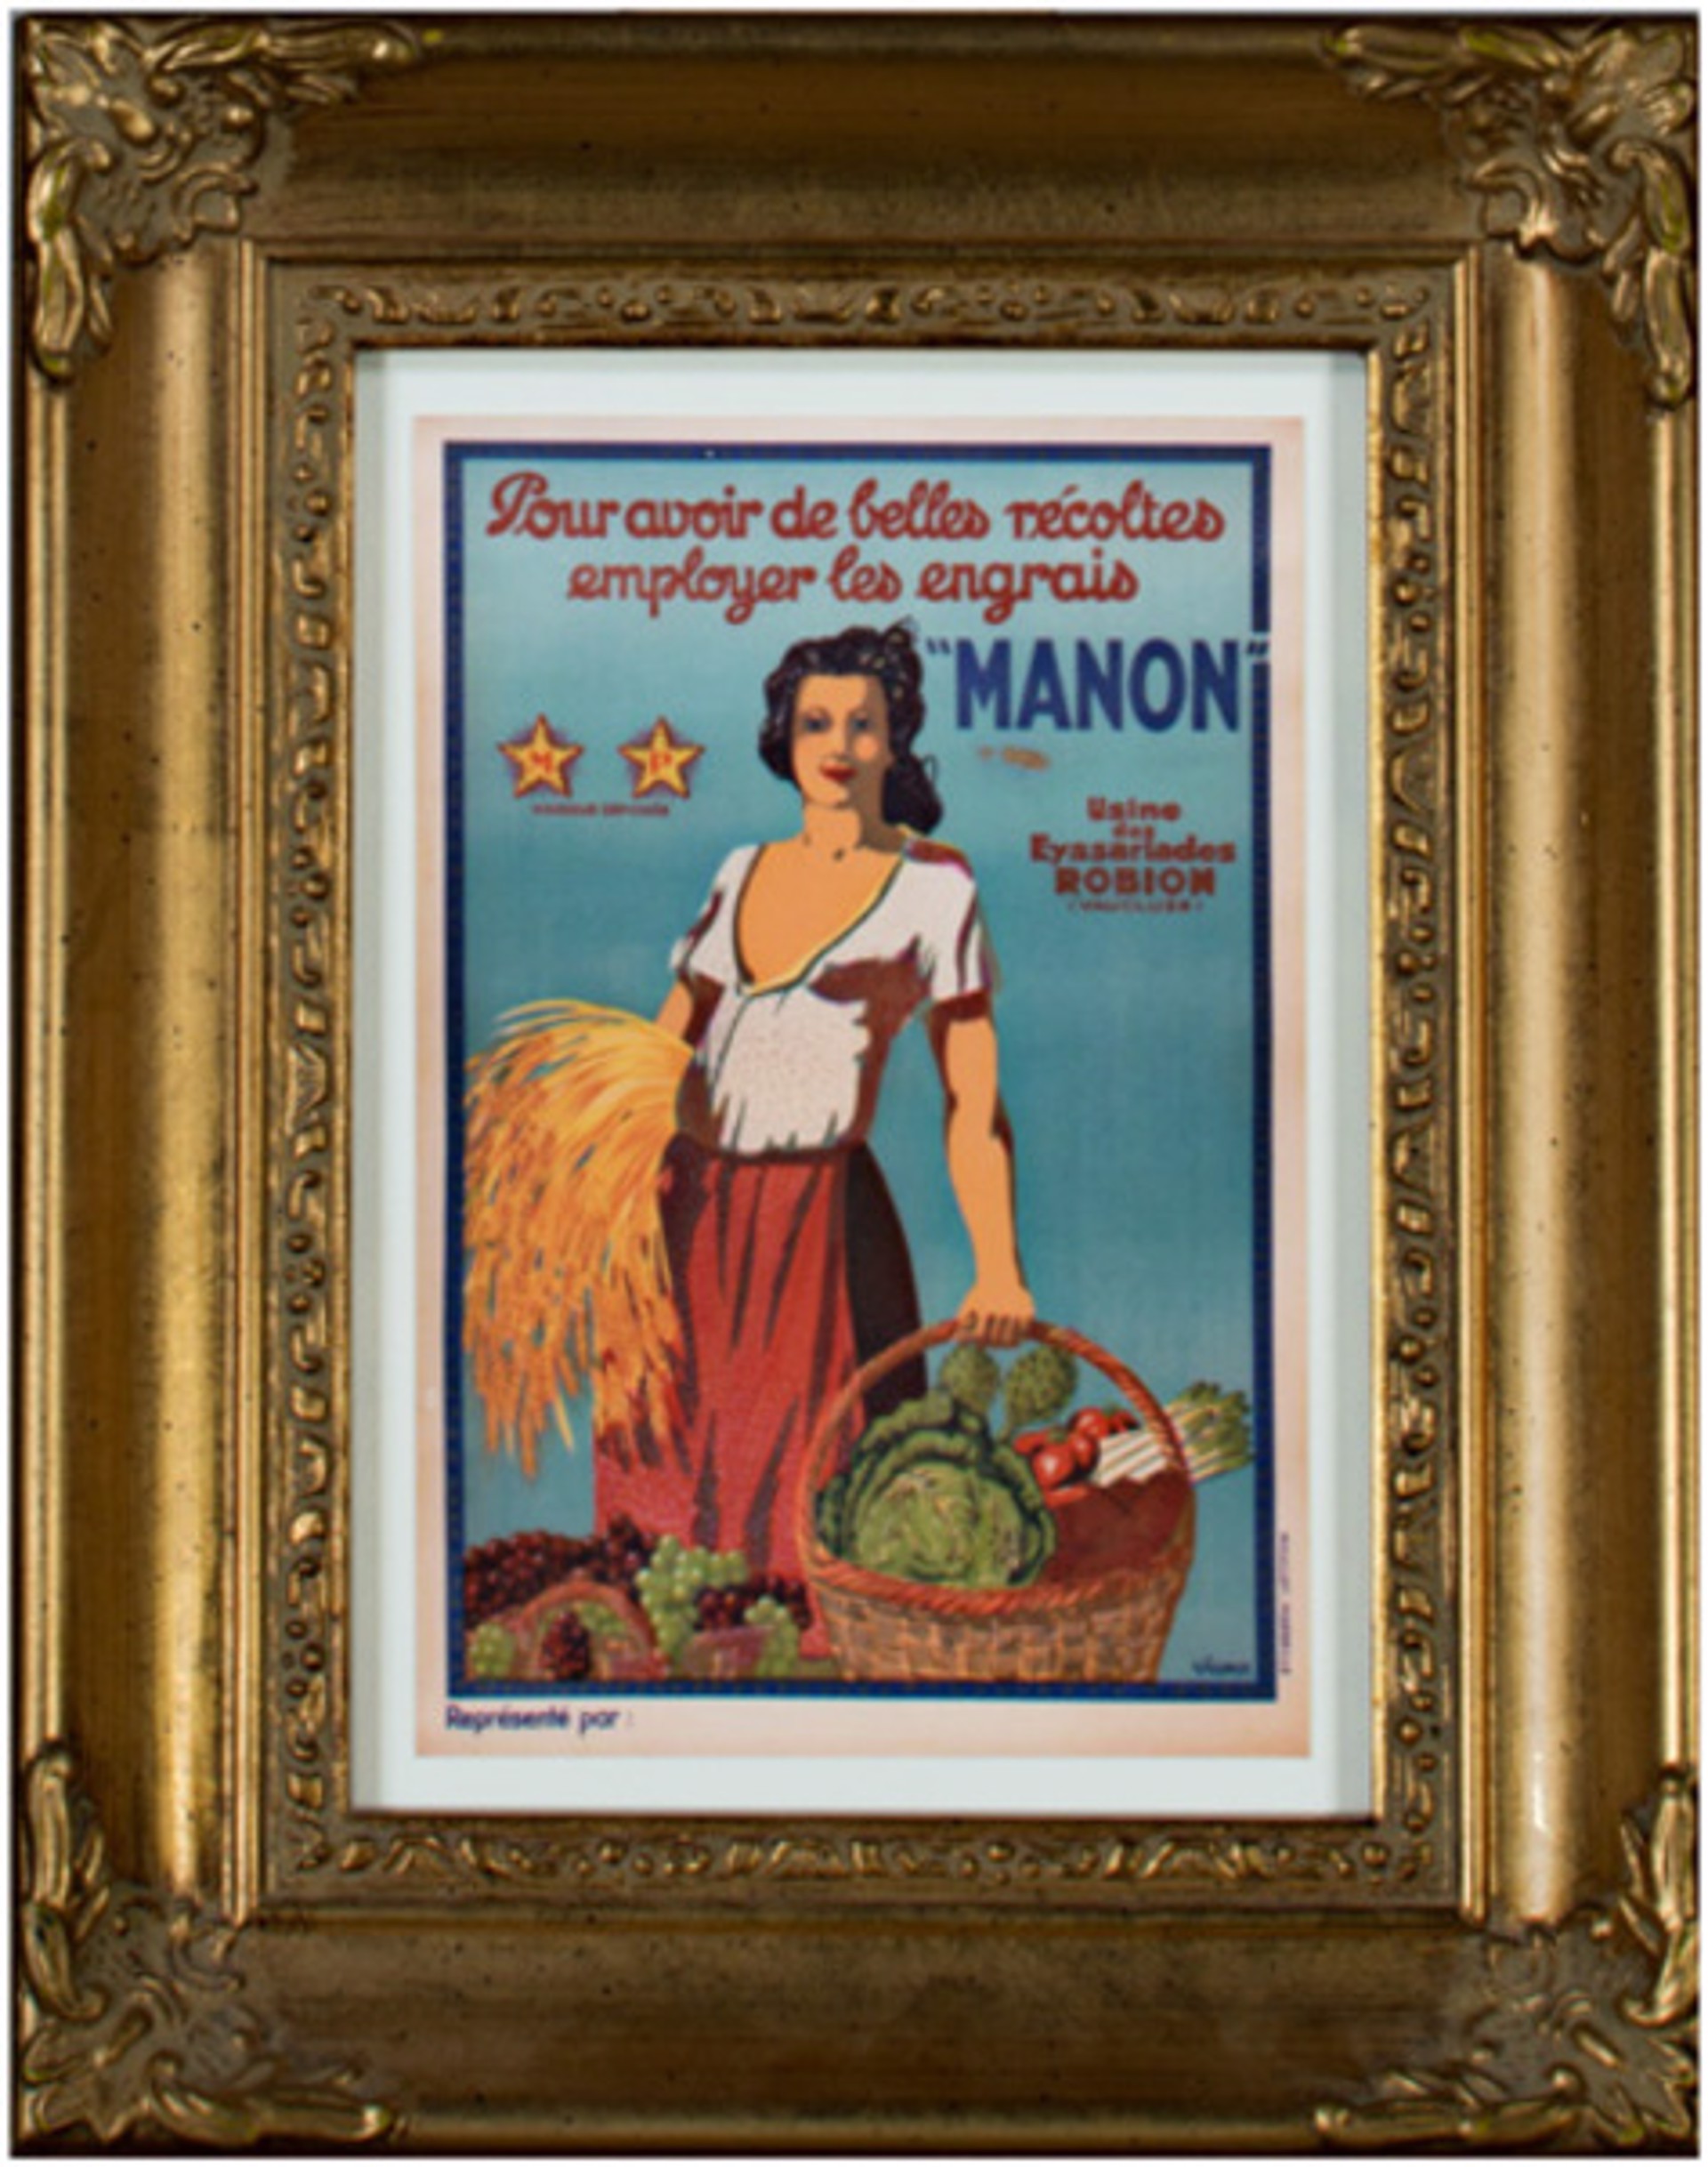 Manon by Viana